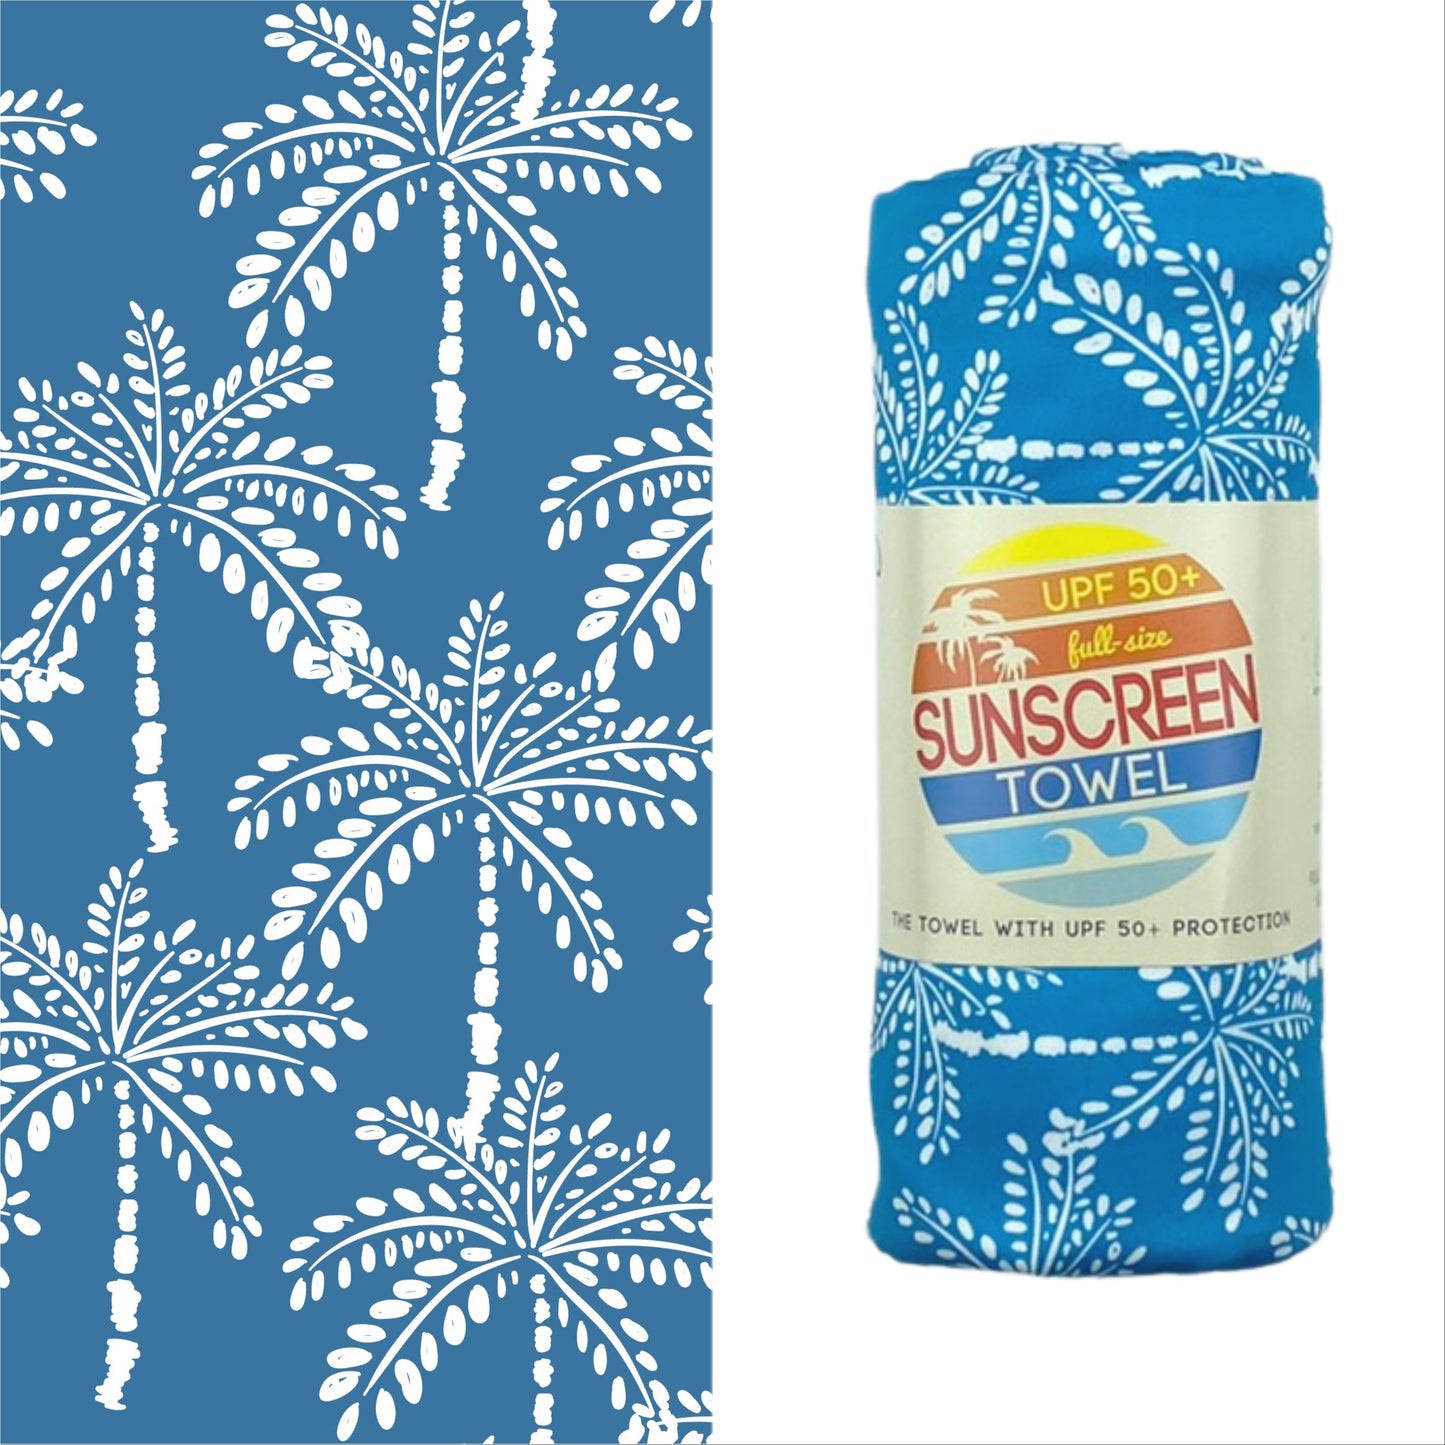 UPF 50+ Sunscreen Towel Full Size